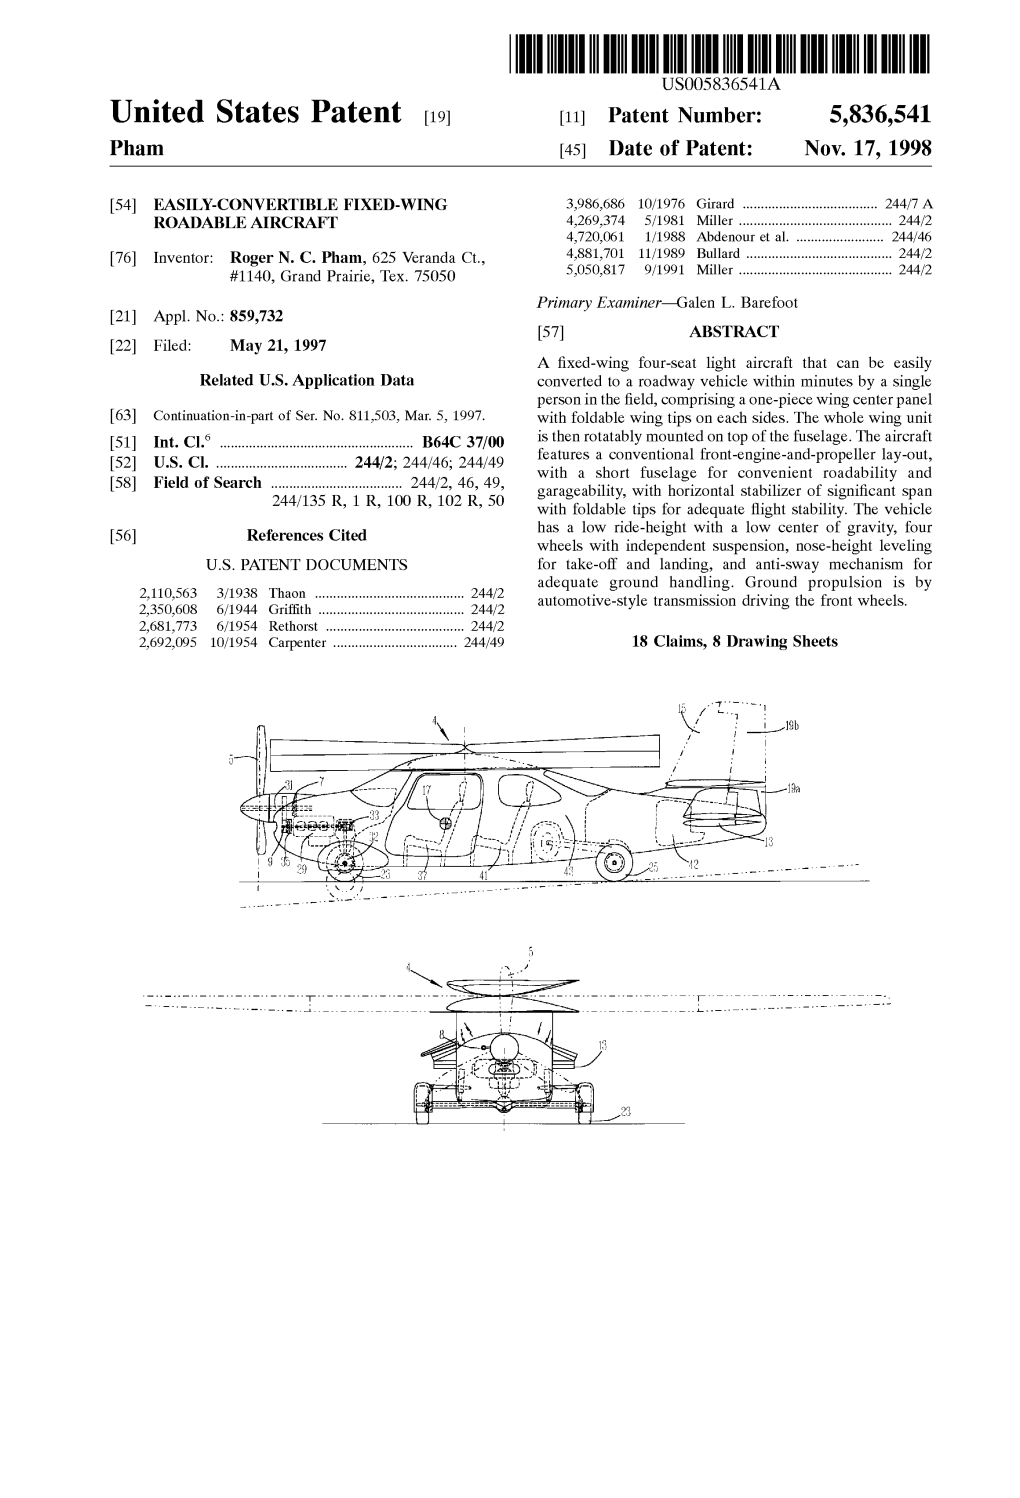 United States Patent (19) 11 Patent Number: 5,836,541 Pham (45) Date of Patent: Nov